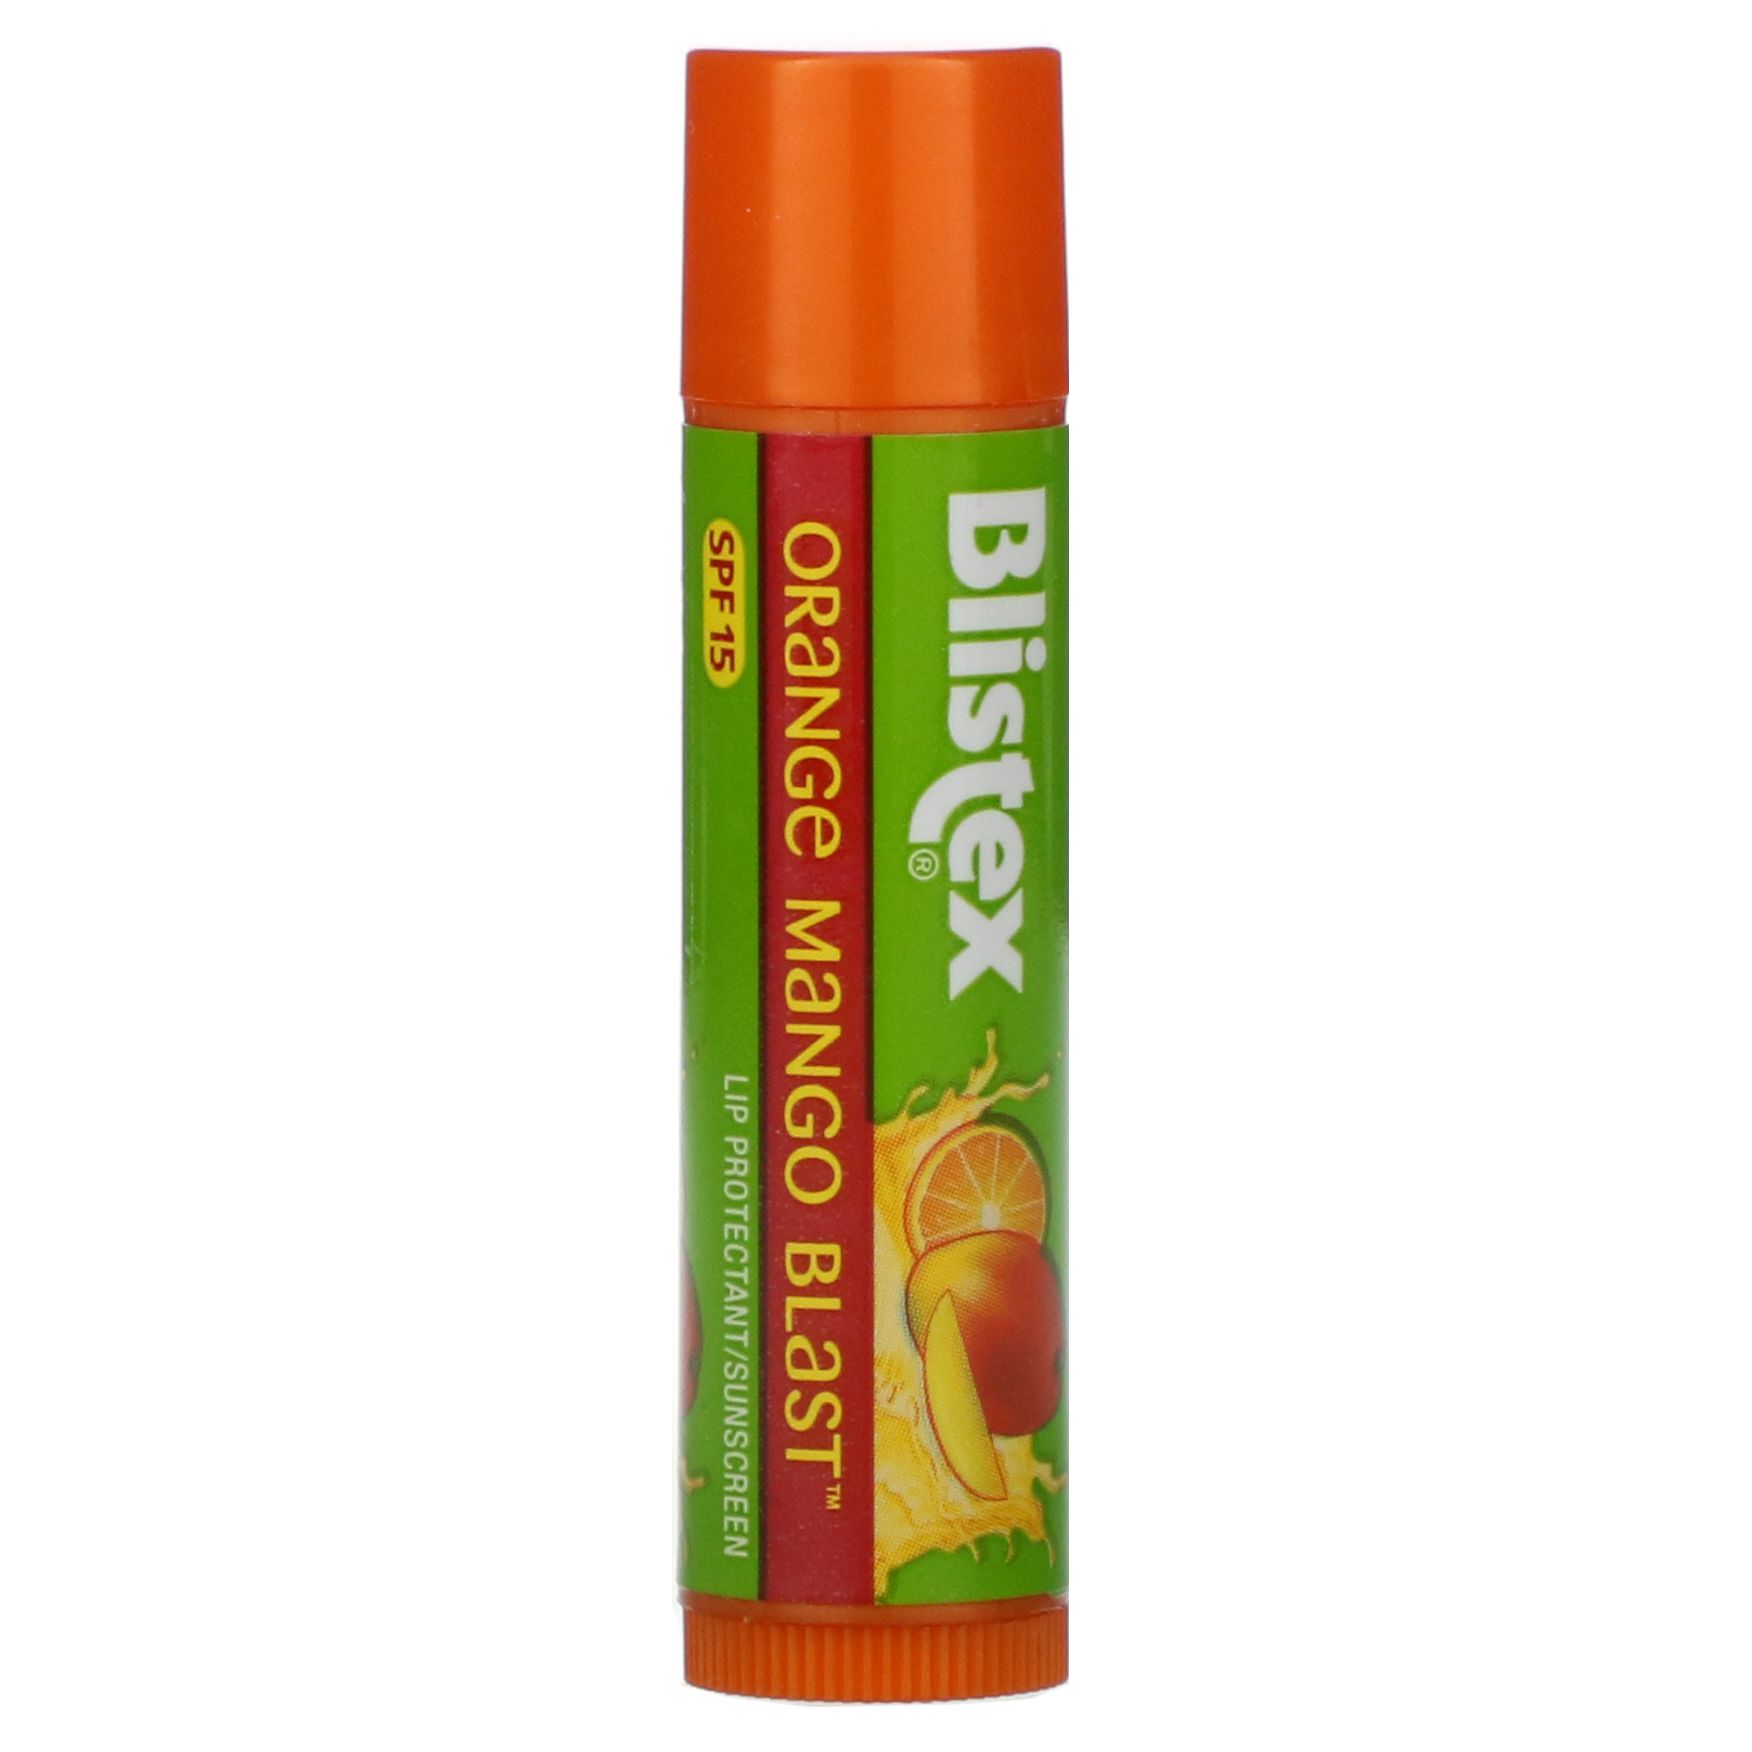 Blistex Lip Protectant/Sunscreen SPF 15 Orange Mango Blast 0.15 oz (4.25 g) цена и фото